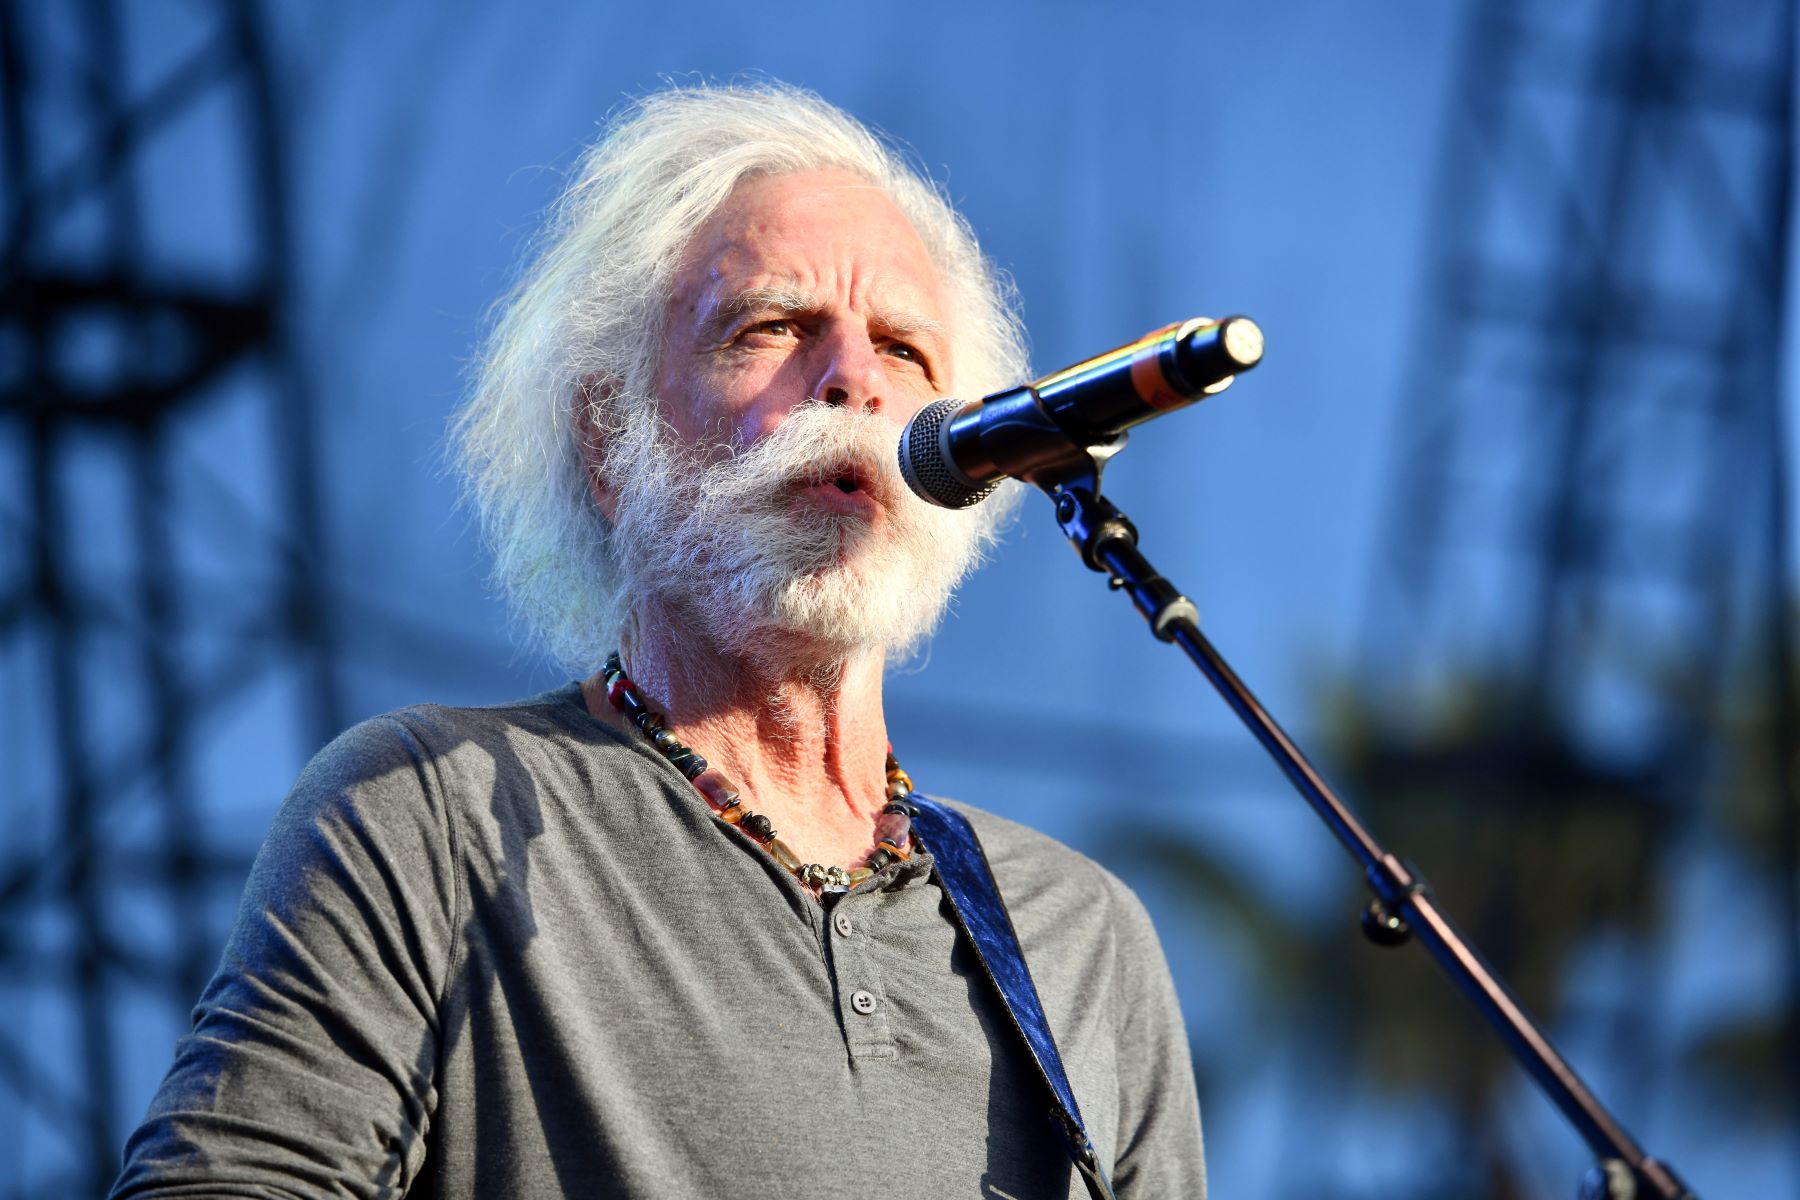 Bob Weir of The Grateful Dead performing at 2019 BeachLife Festival in Redondo Beach, California